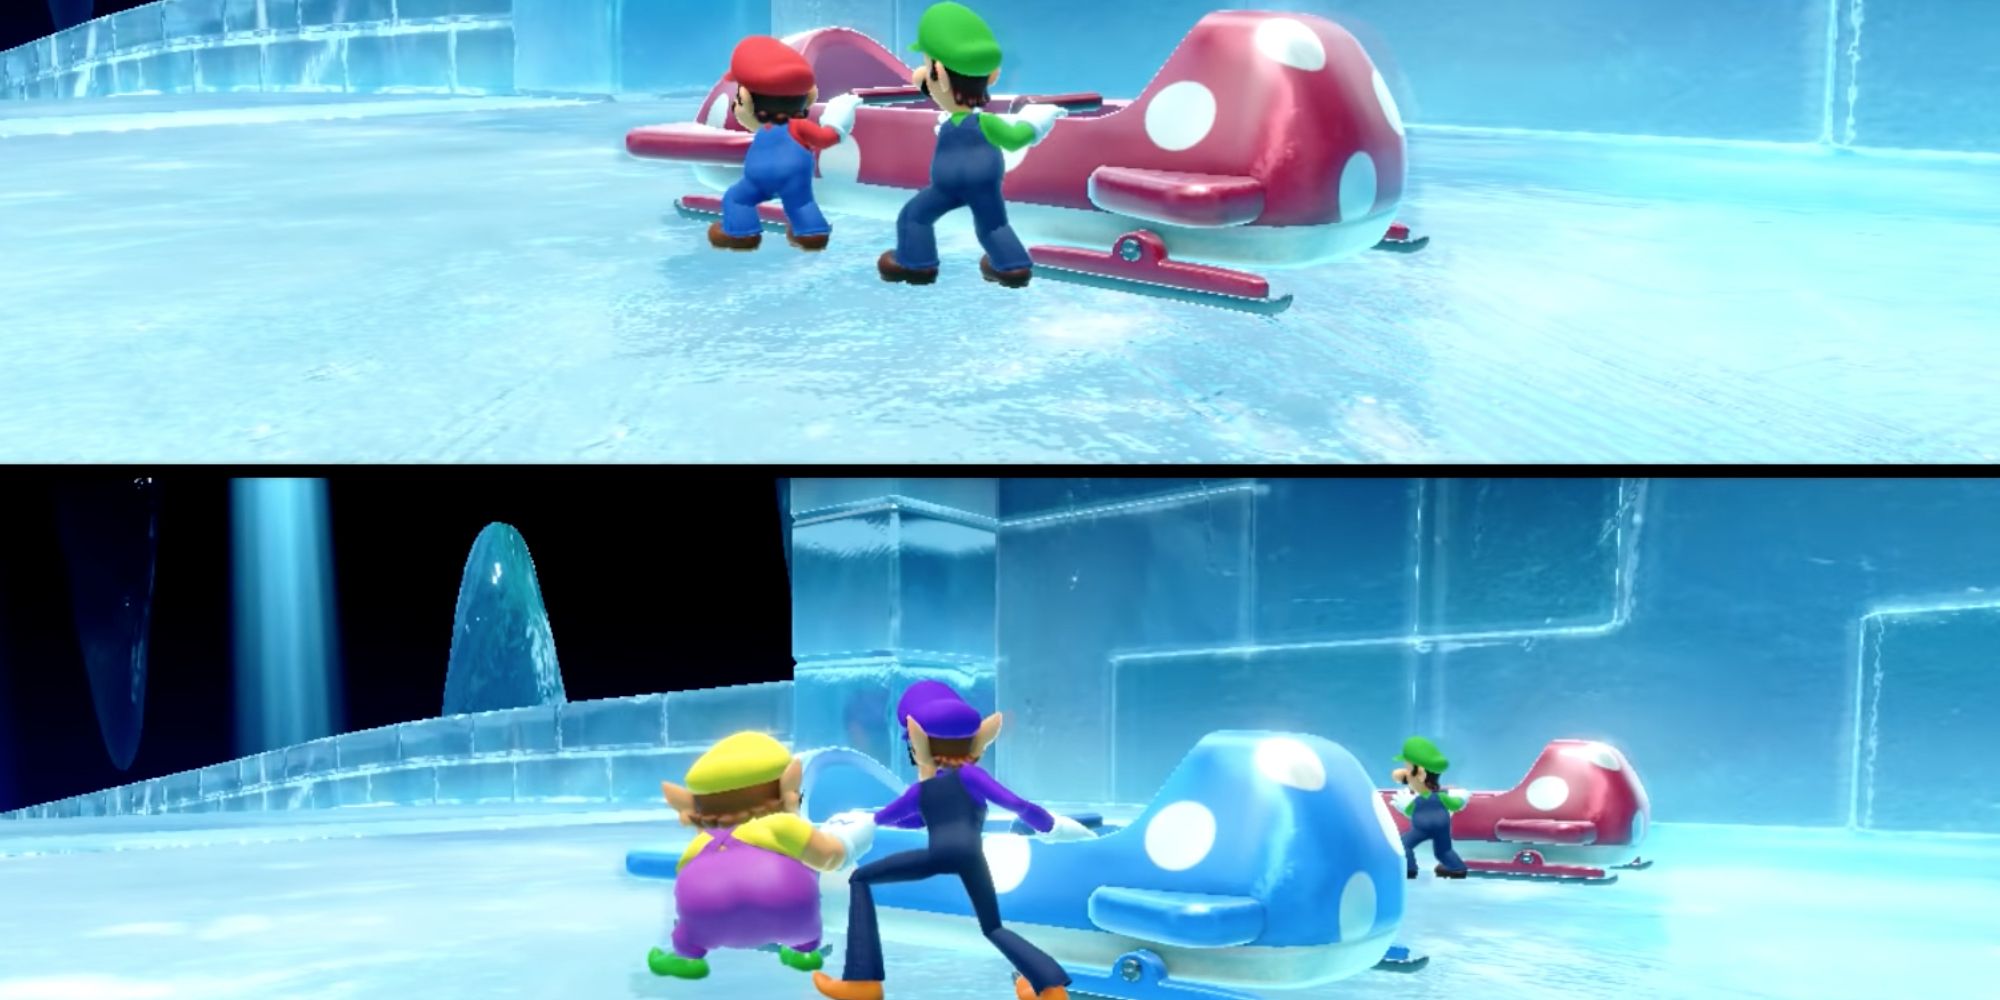 Bobsled Run from Mario Party Featuring Mario, Luigi, Wario, and Waluigi